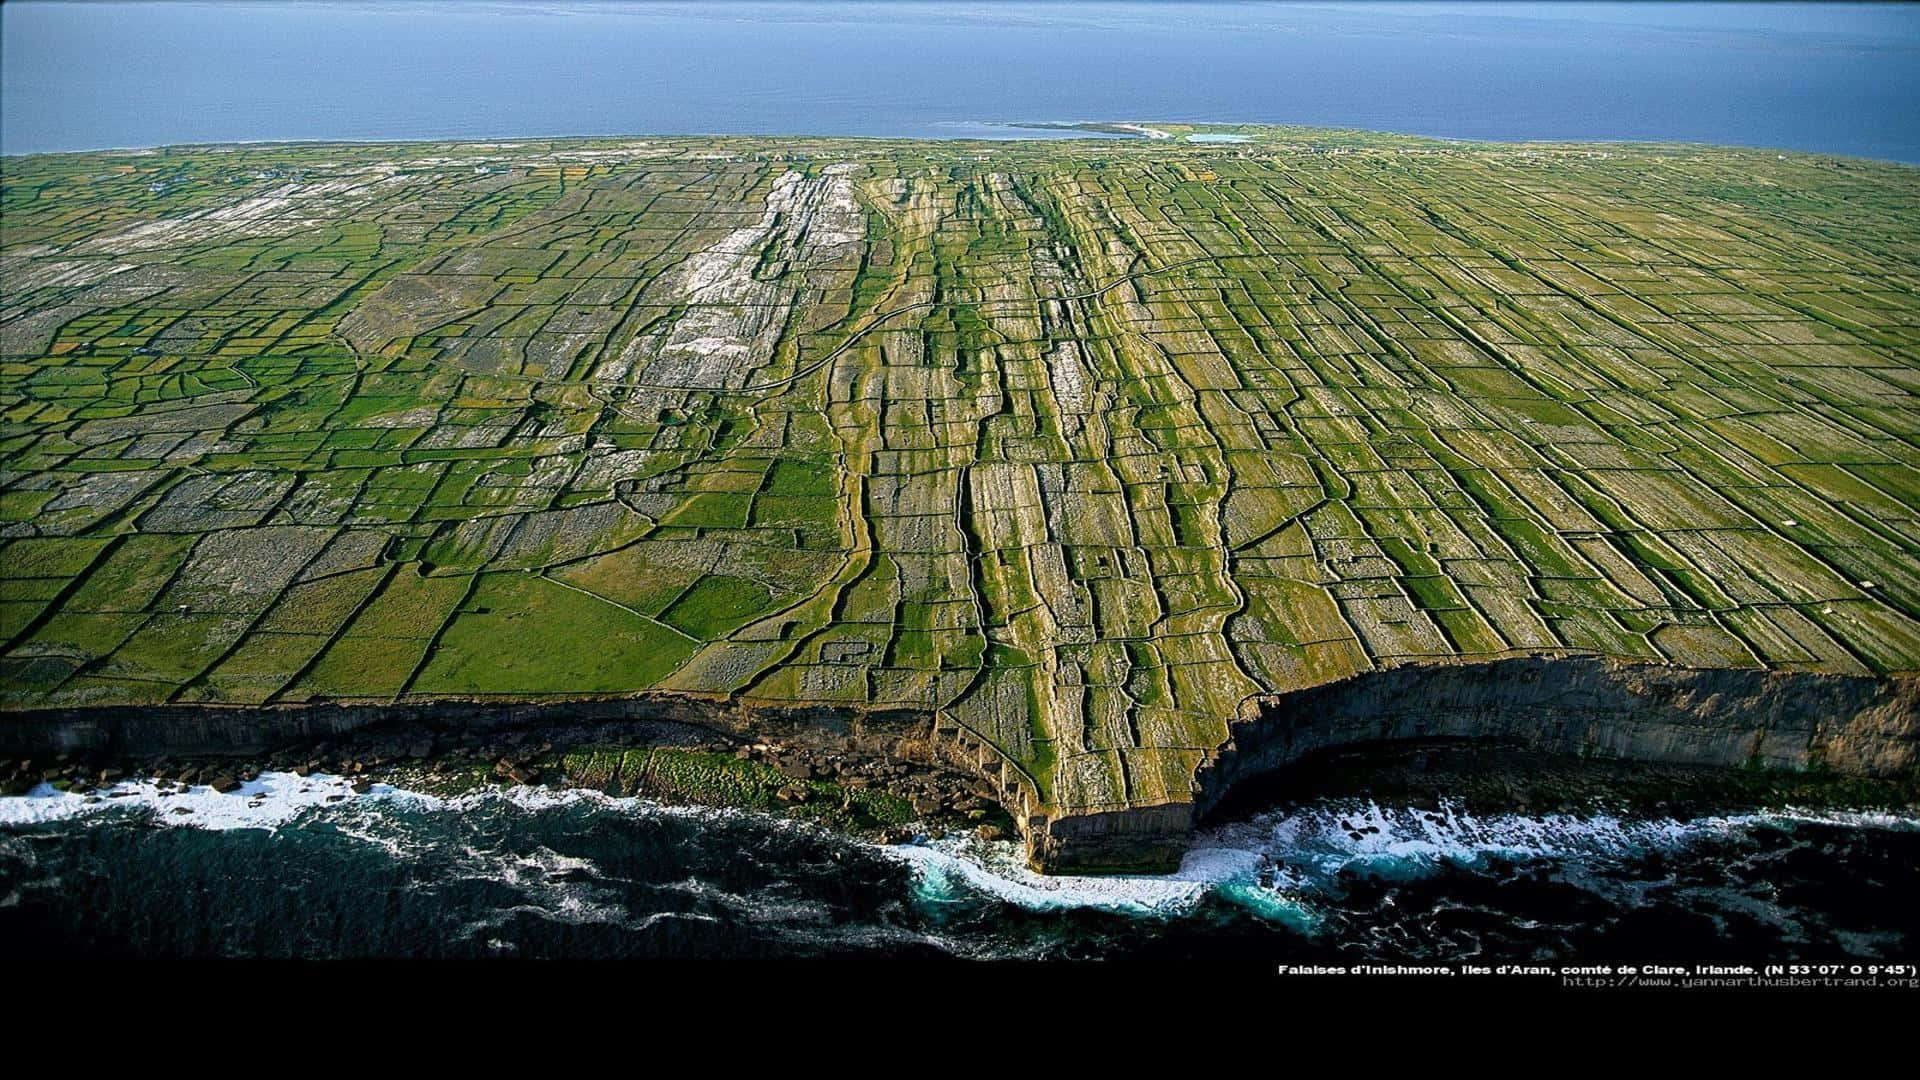 Breathtaking Scenery of Ireland